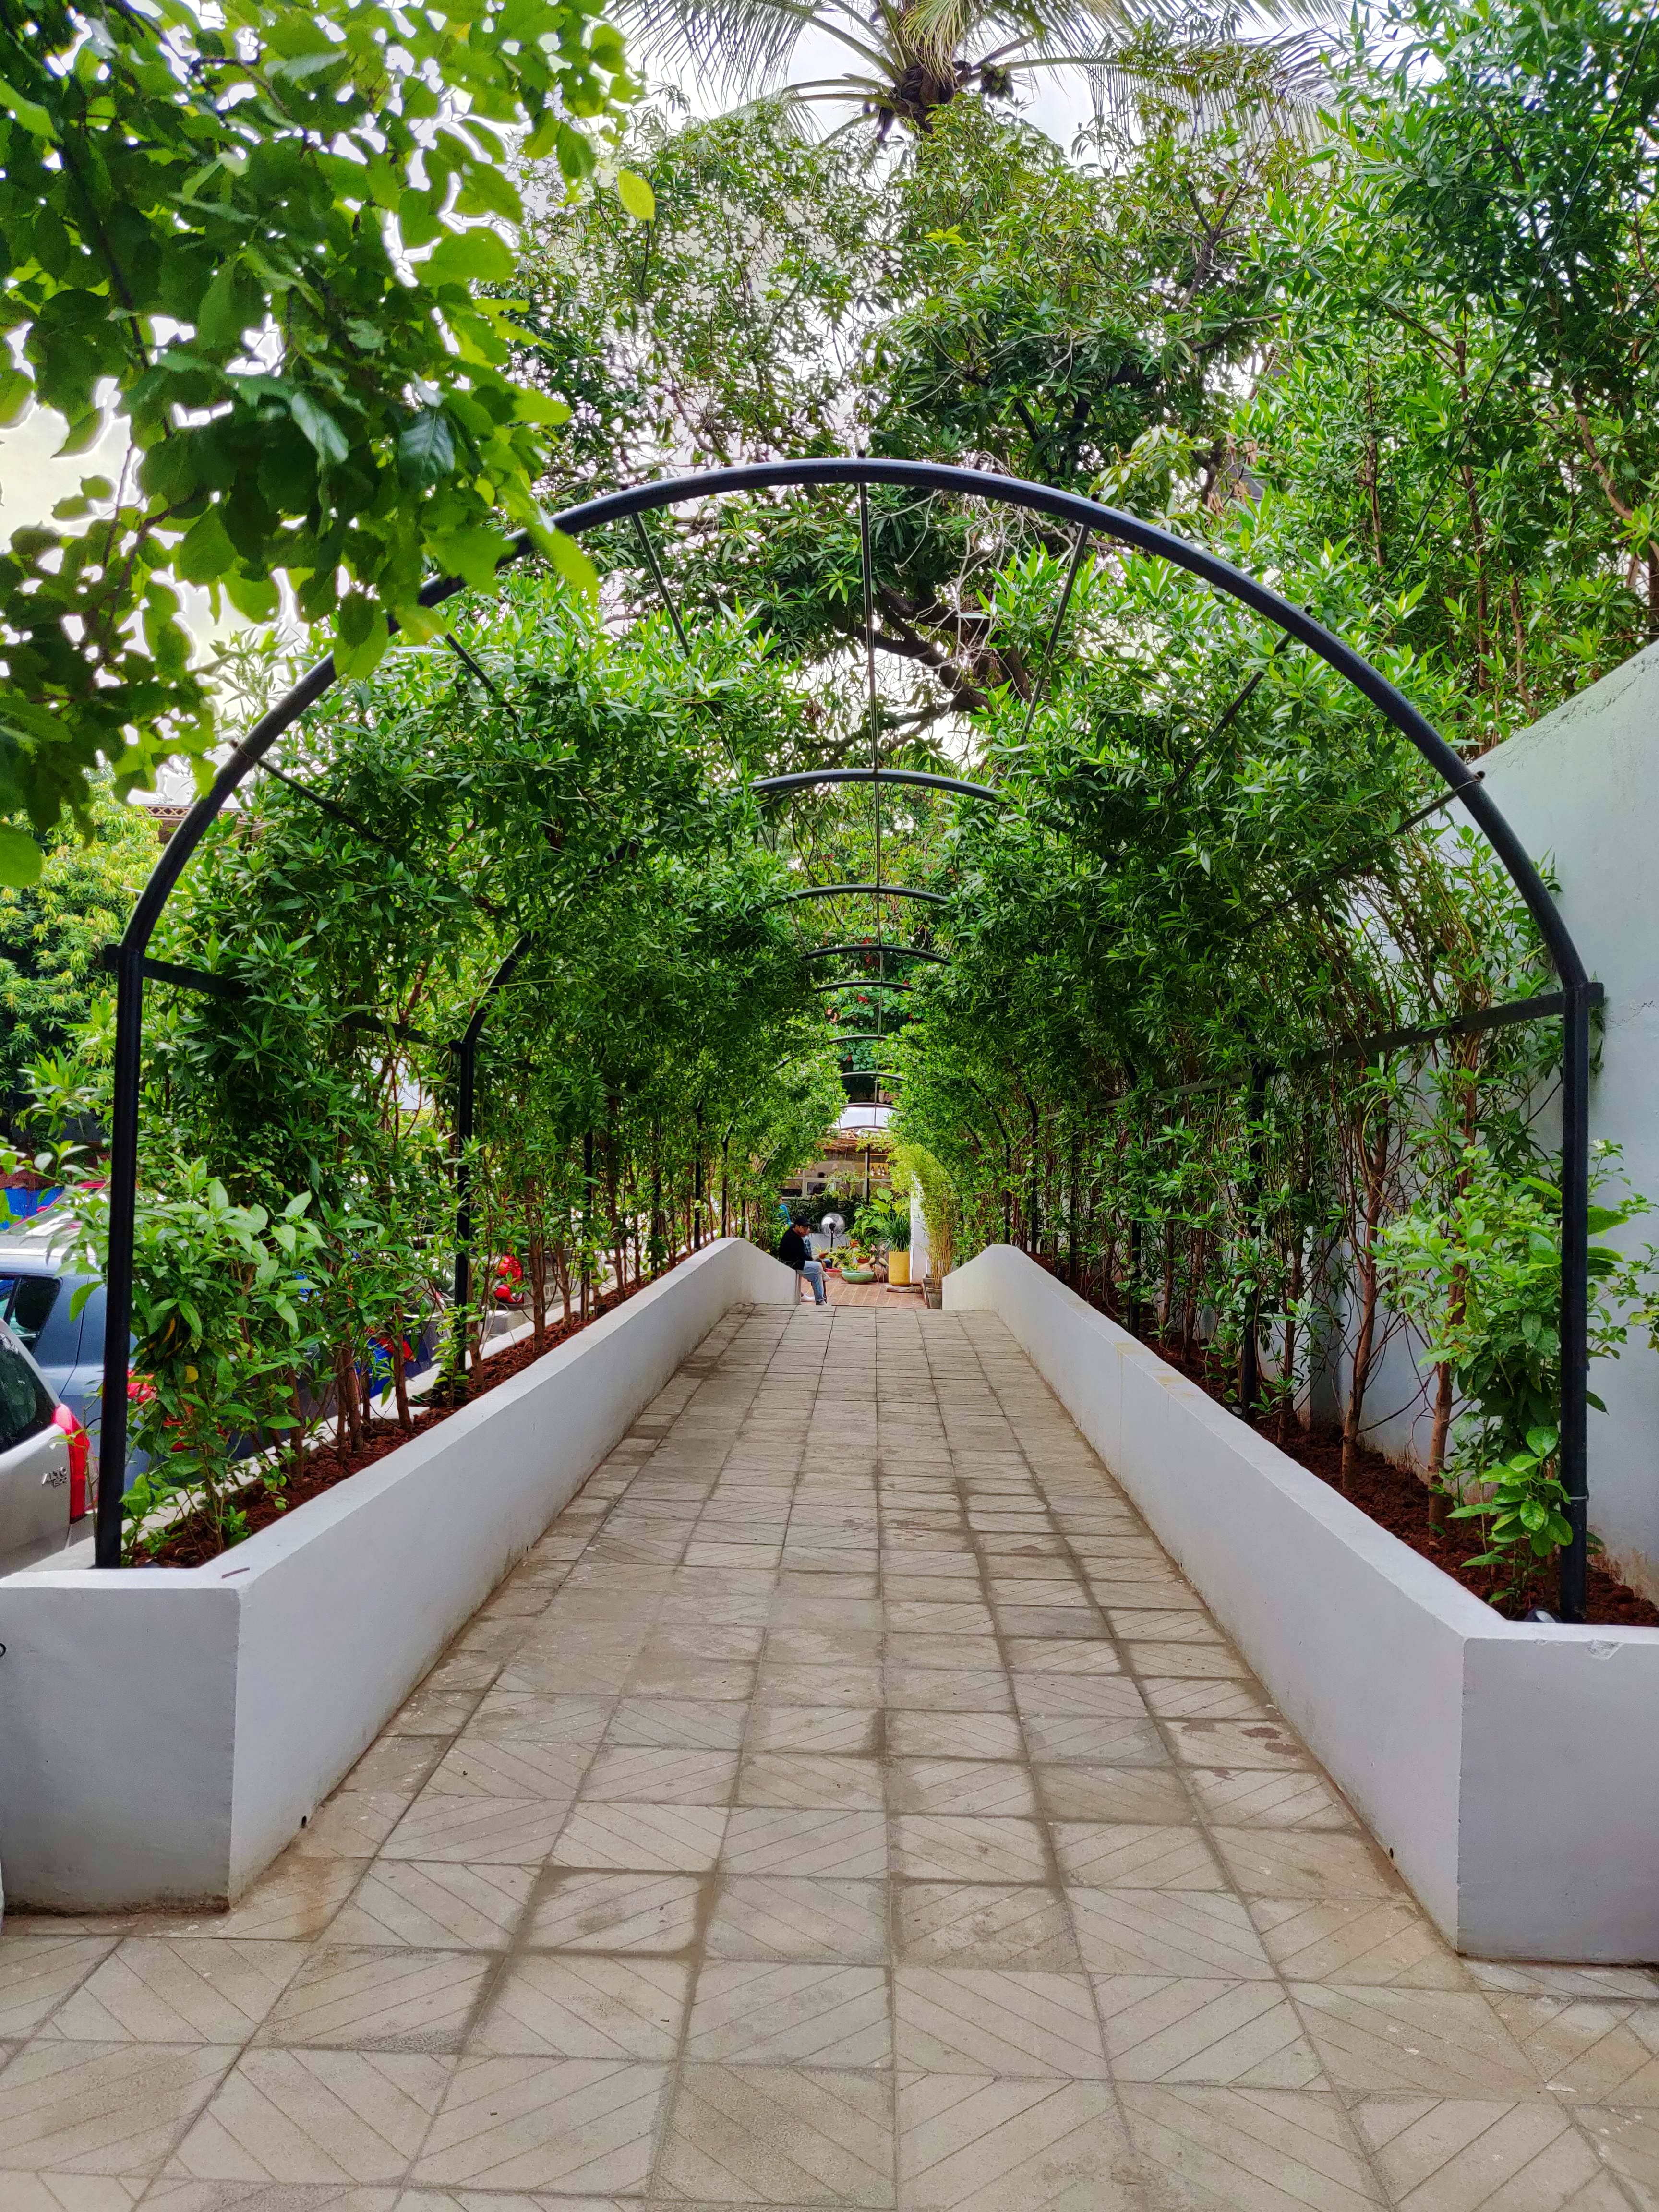 Walkway,Tree,Arch,Architecture,Botany,Plant,Garden,Botanical garden,Shrub,Building